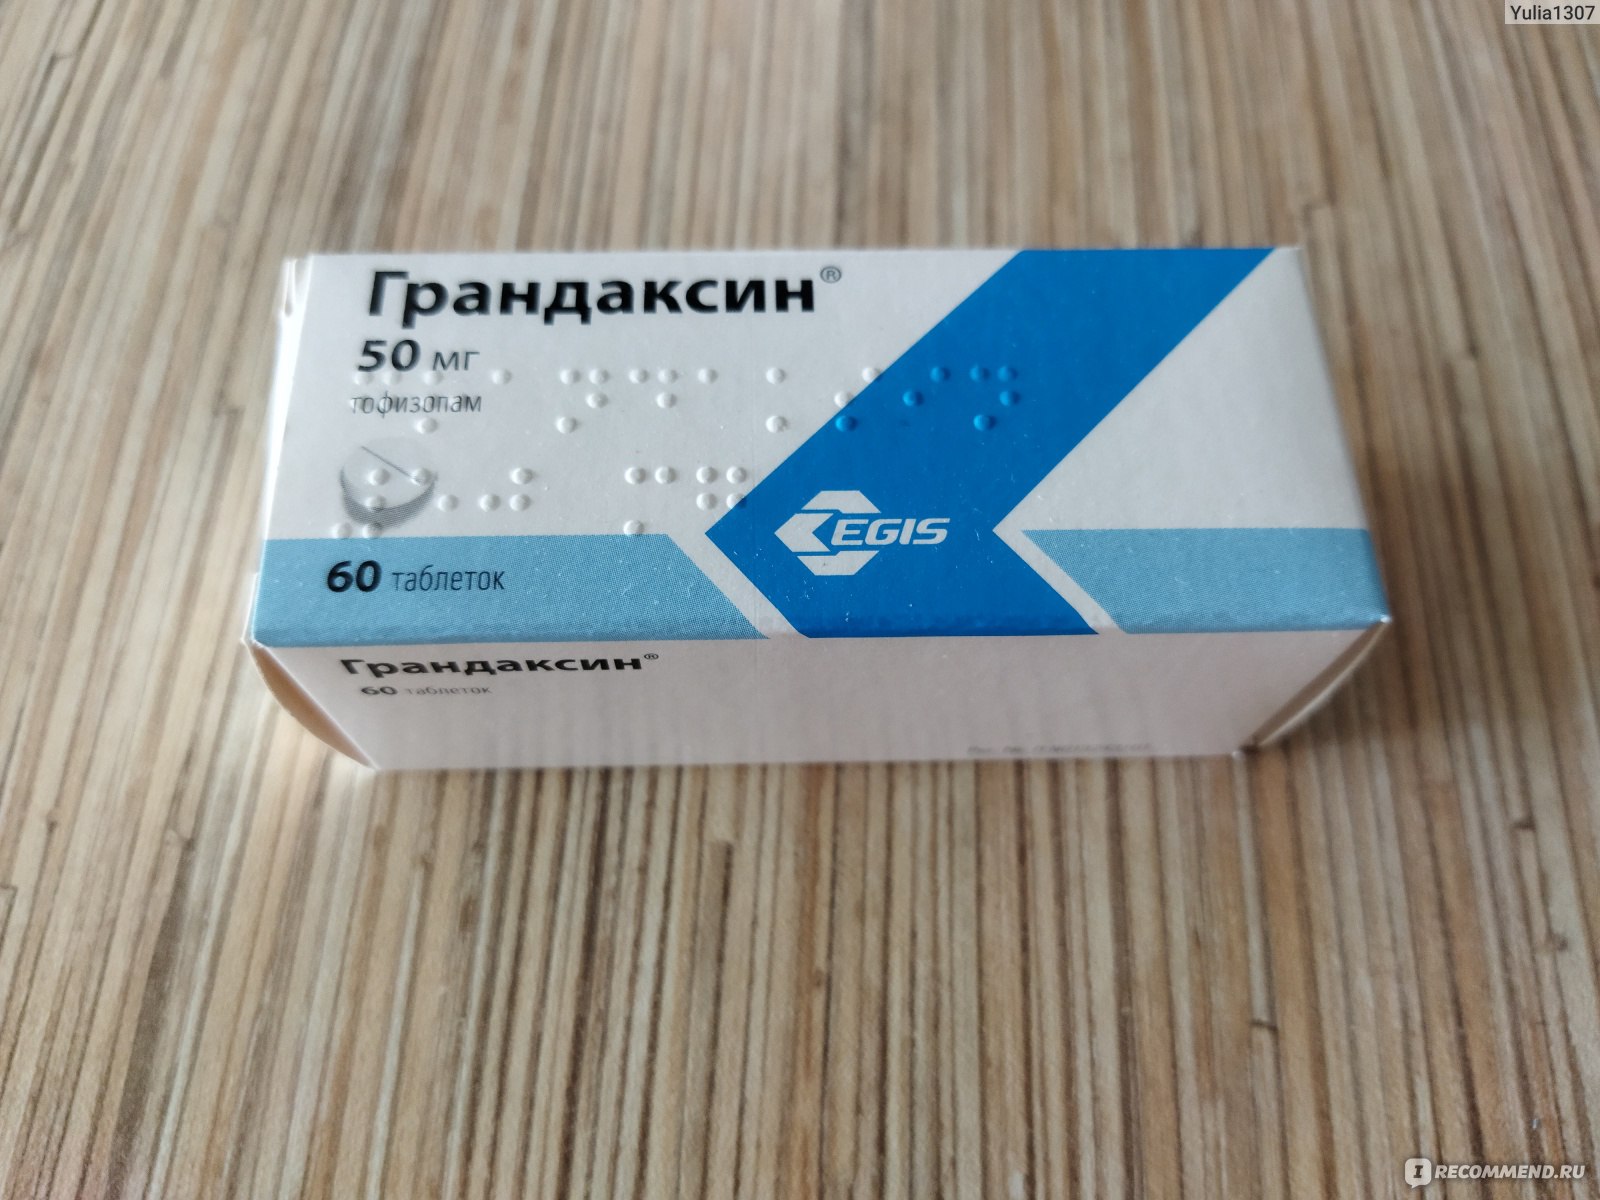 Грандаксин группа препаратов. Грандаксин (таб. 50мг n20 Вн ) Egis-Венгрия. Грандаксин упаковка. Грандаксин картинки. Грандаксин фото упаковки.